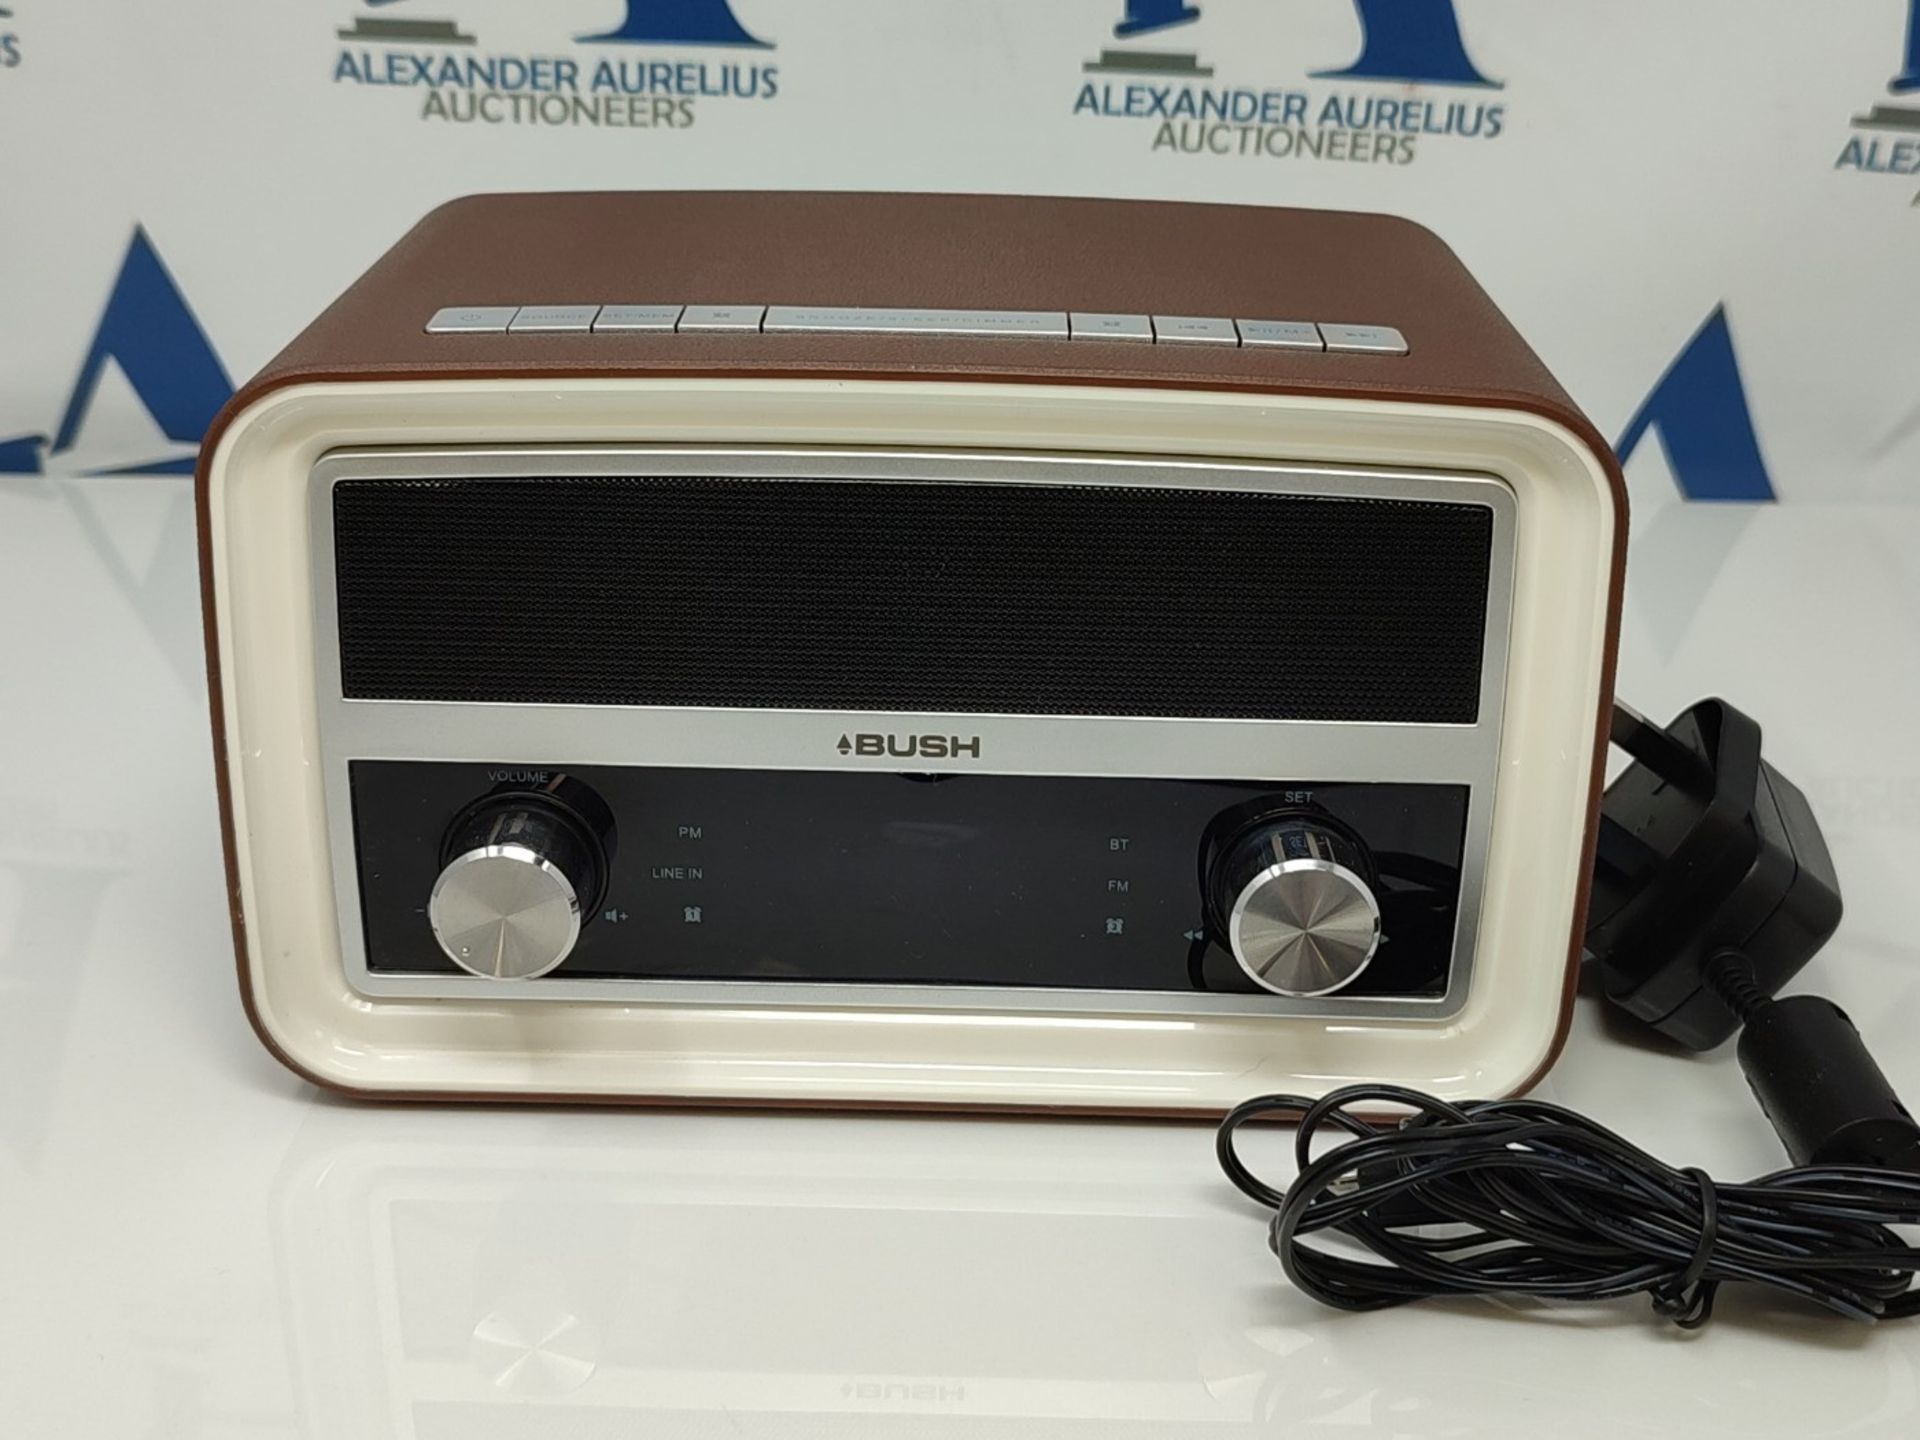 Bush model no. BT-201 FM classic radio with bluetooth - Image 3 of 3